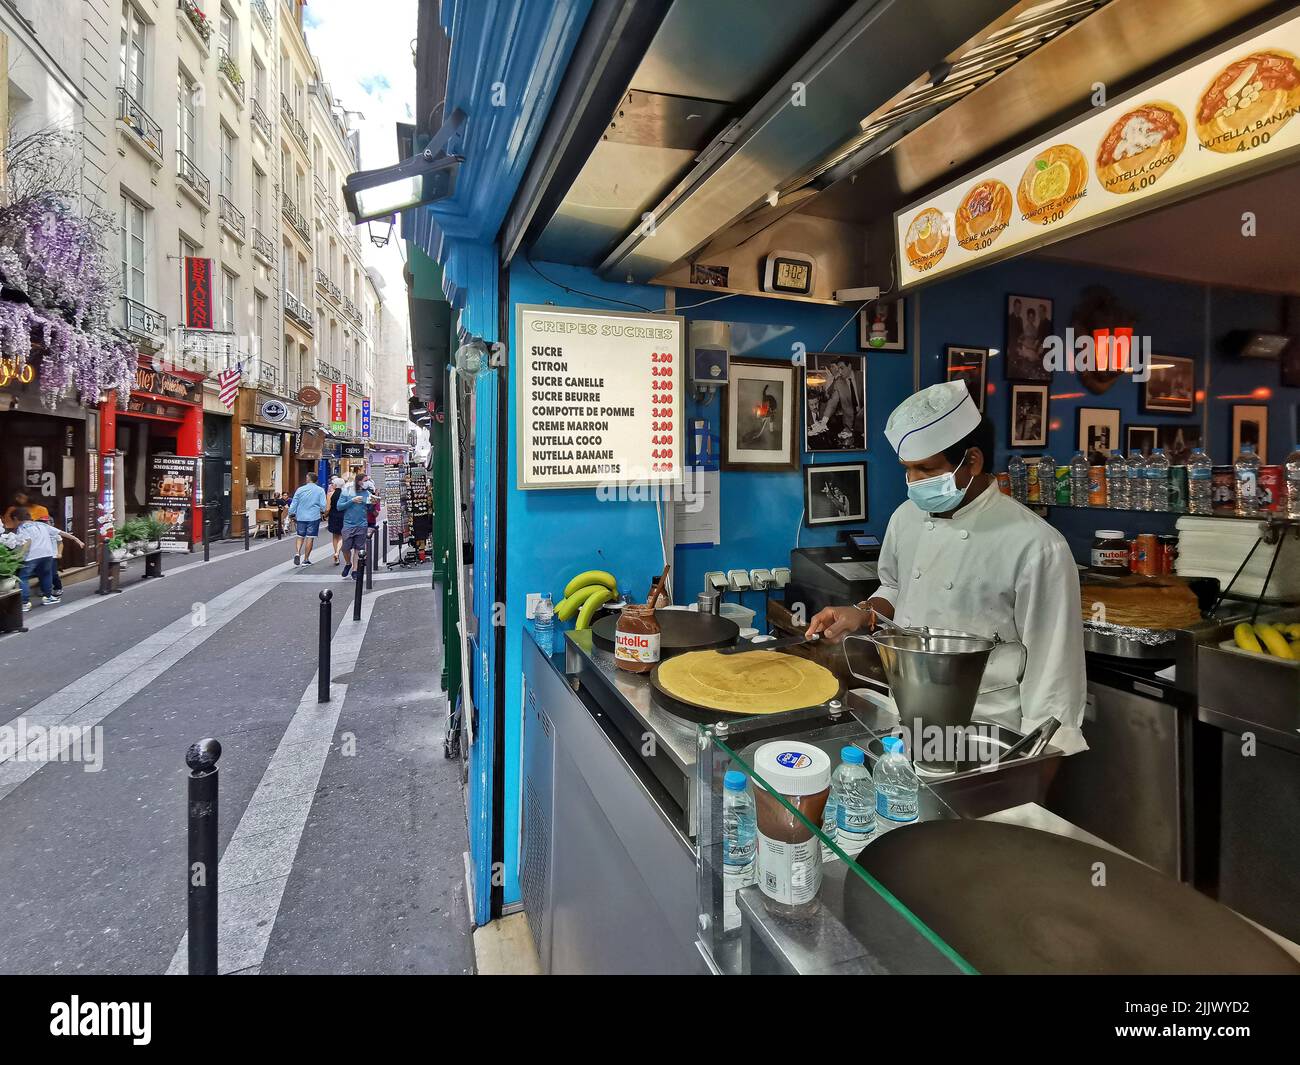 France, Paris, Man making crepes at a Creperie   Photo © Fabio Mazzarella/Sintesi/Alamy Stock Photo Stock Photo